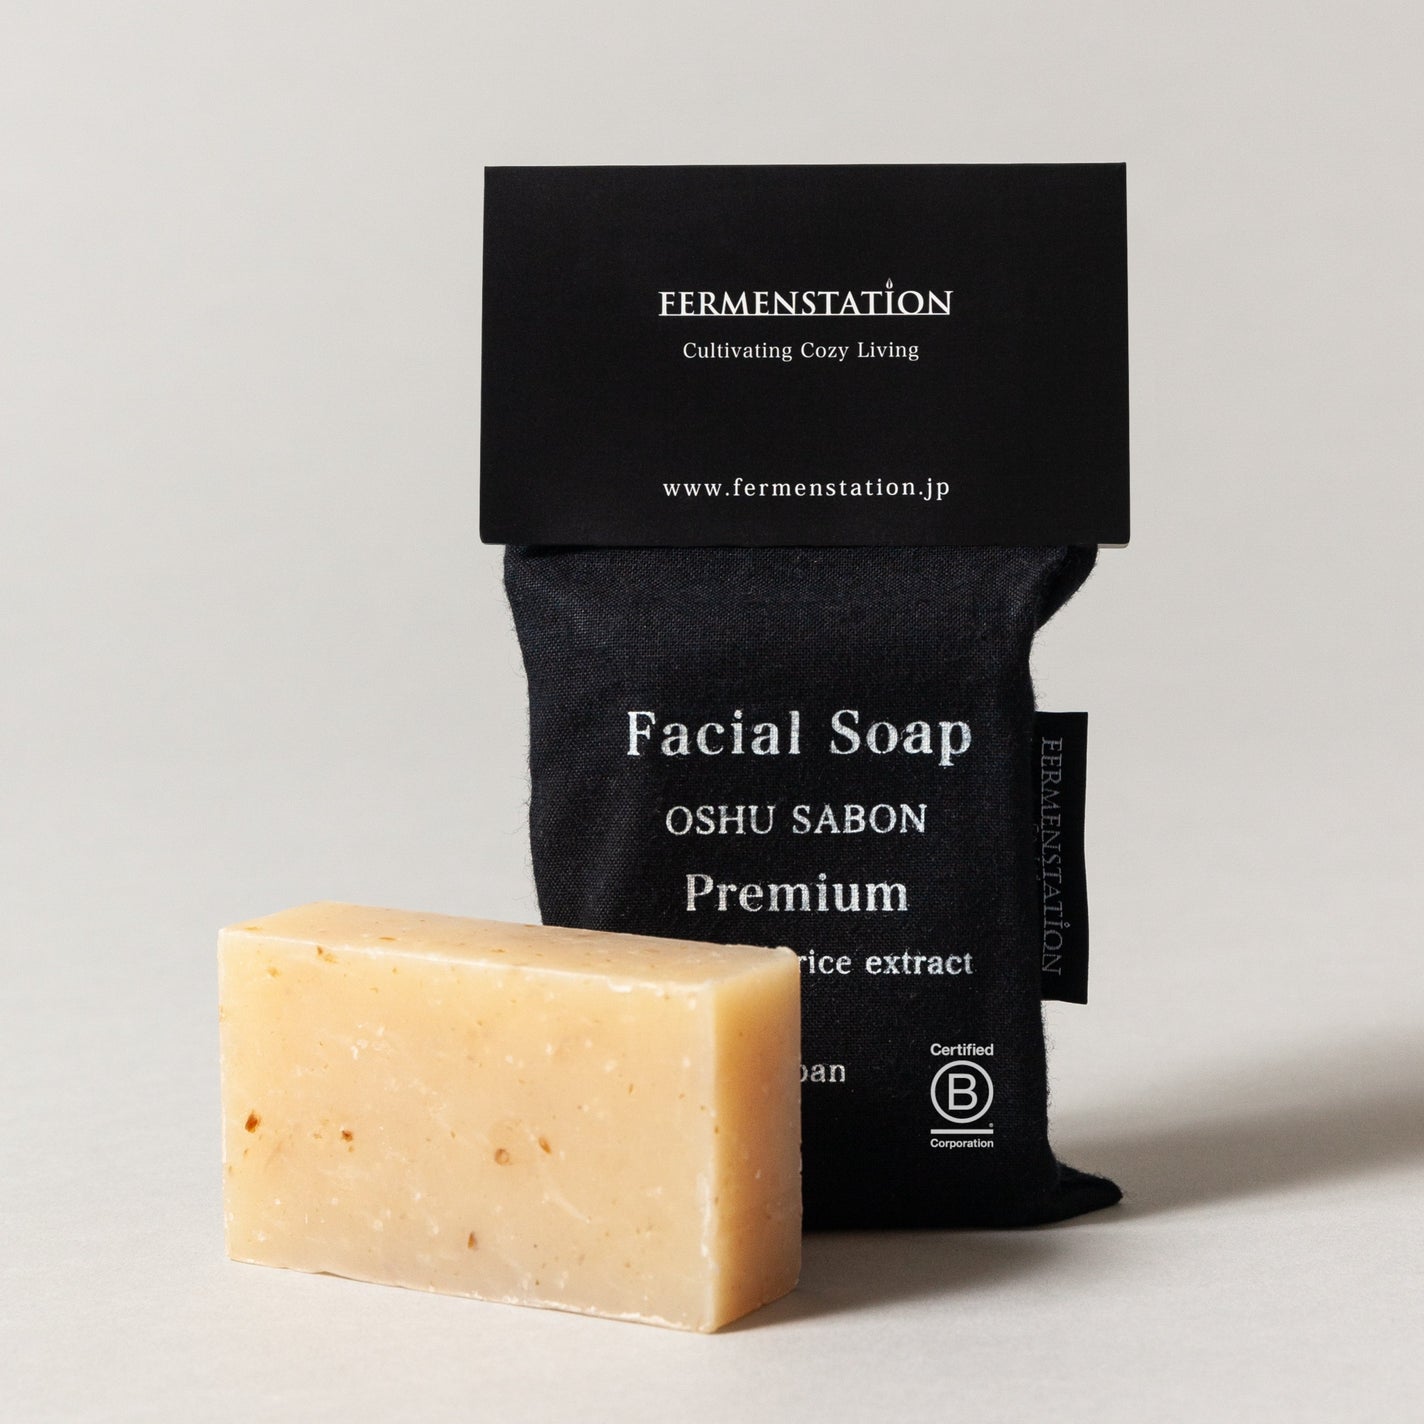 Fermenstation Facial Soap - Premium